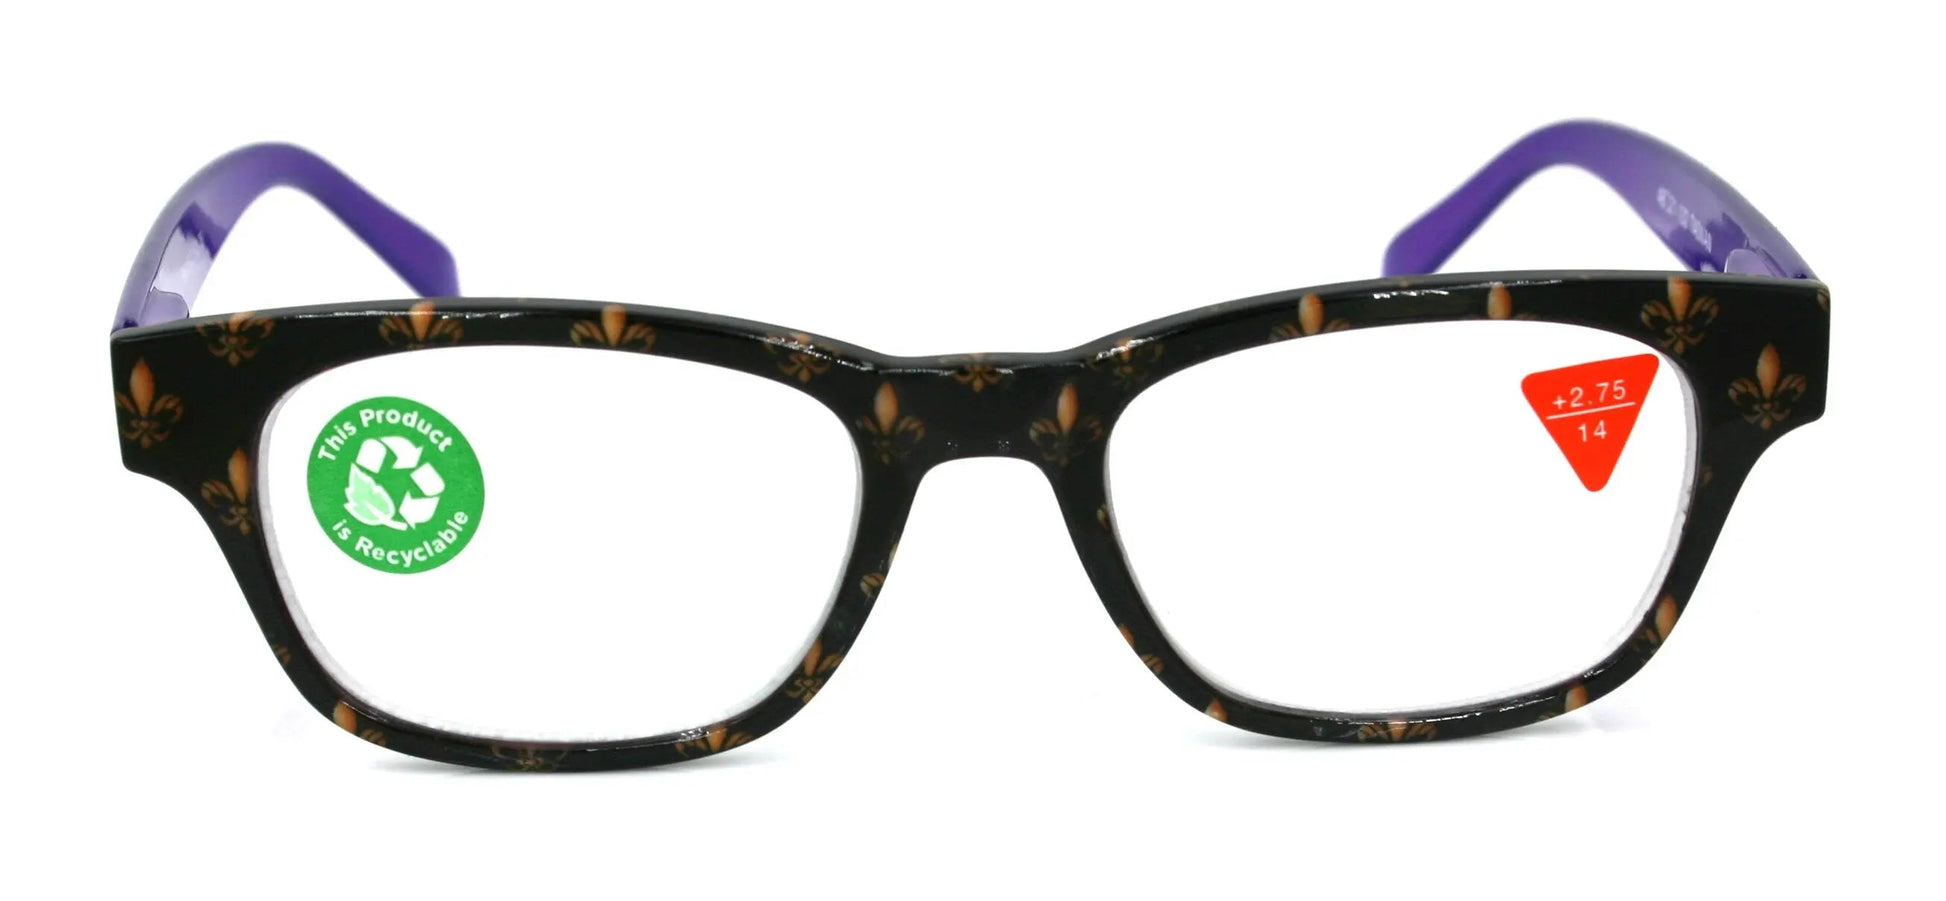 Lilly, (Premium) Reading Glasses (Fleur De Lis) +1 .. +3 Magnifying, Fashion Square Optical Frame. (Purple, Gold, Black) NY Fifth Avenue.